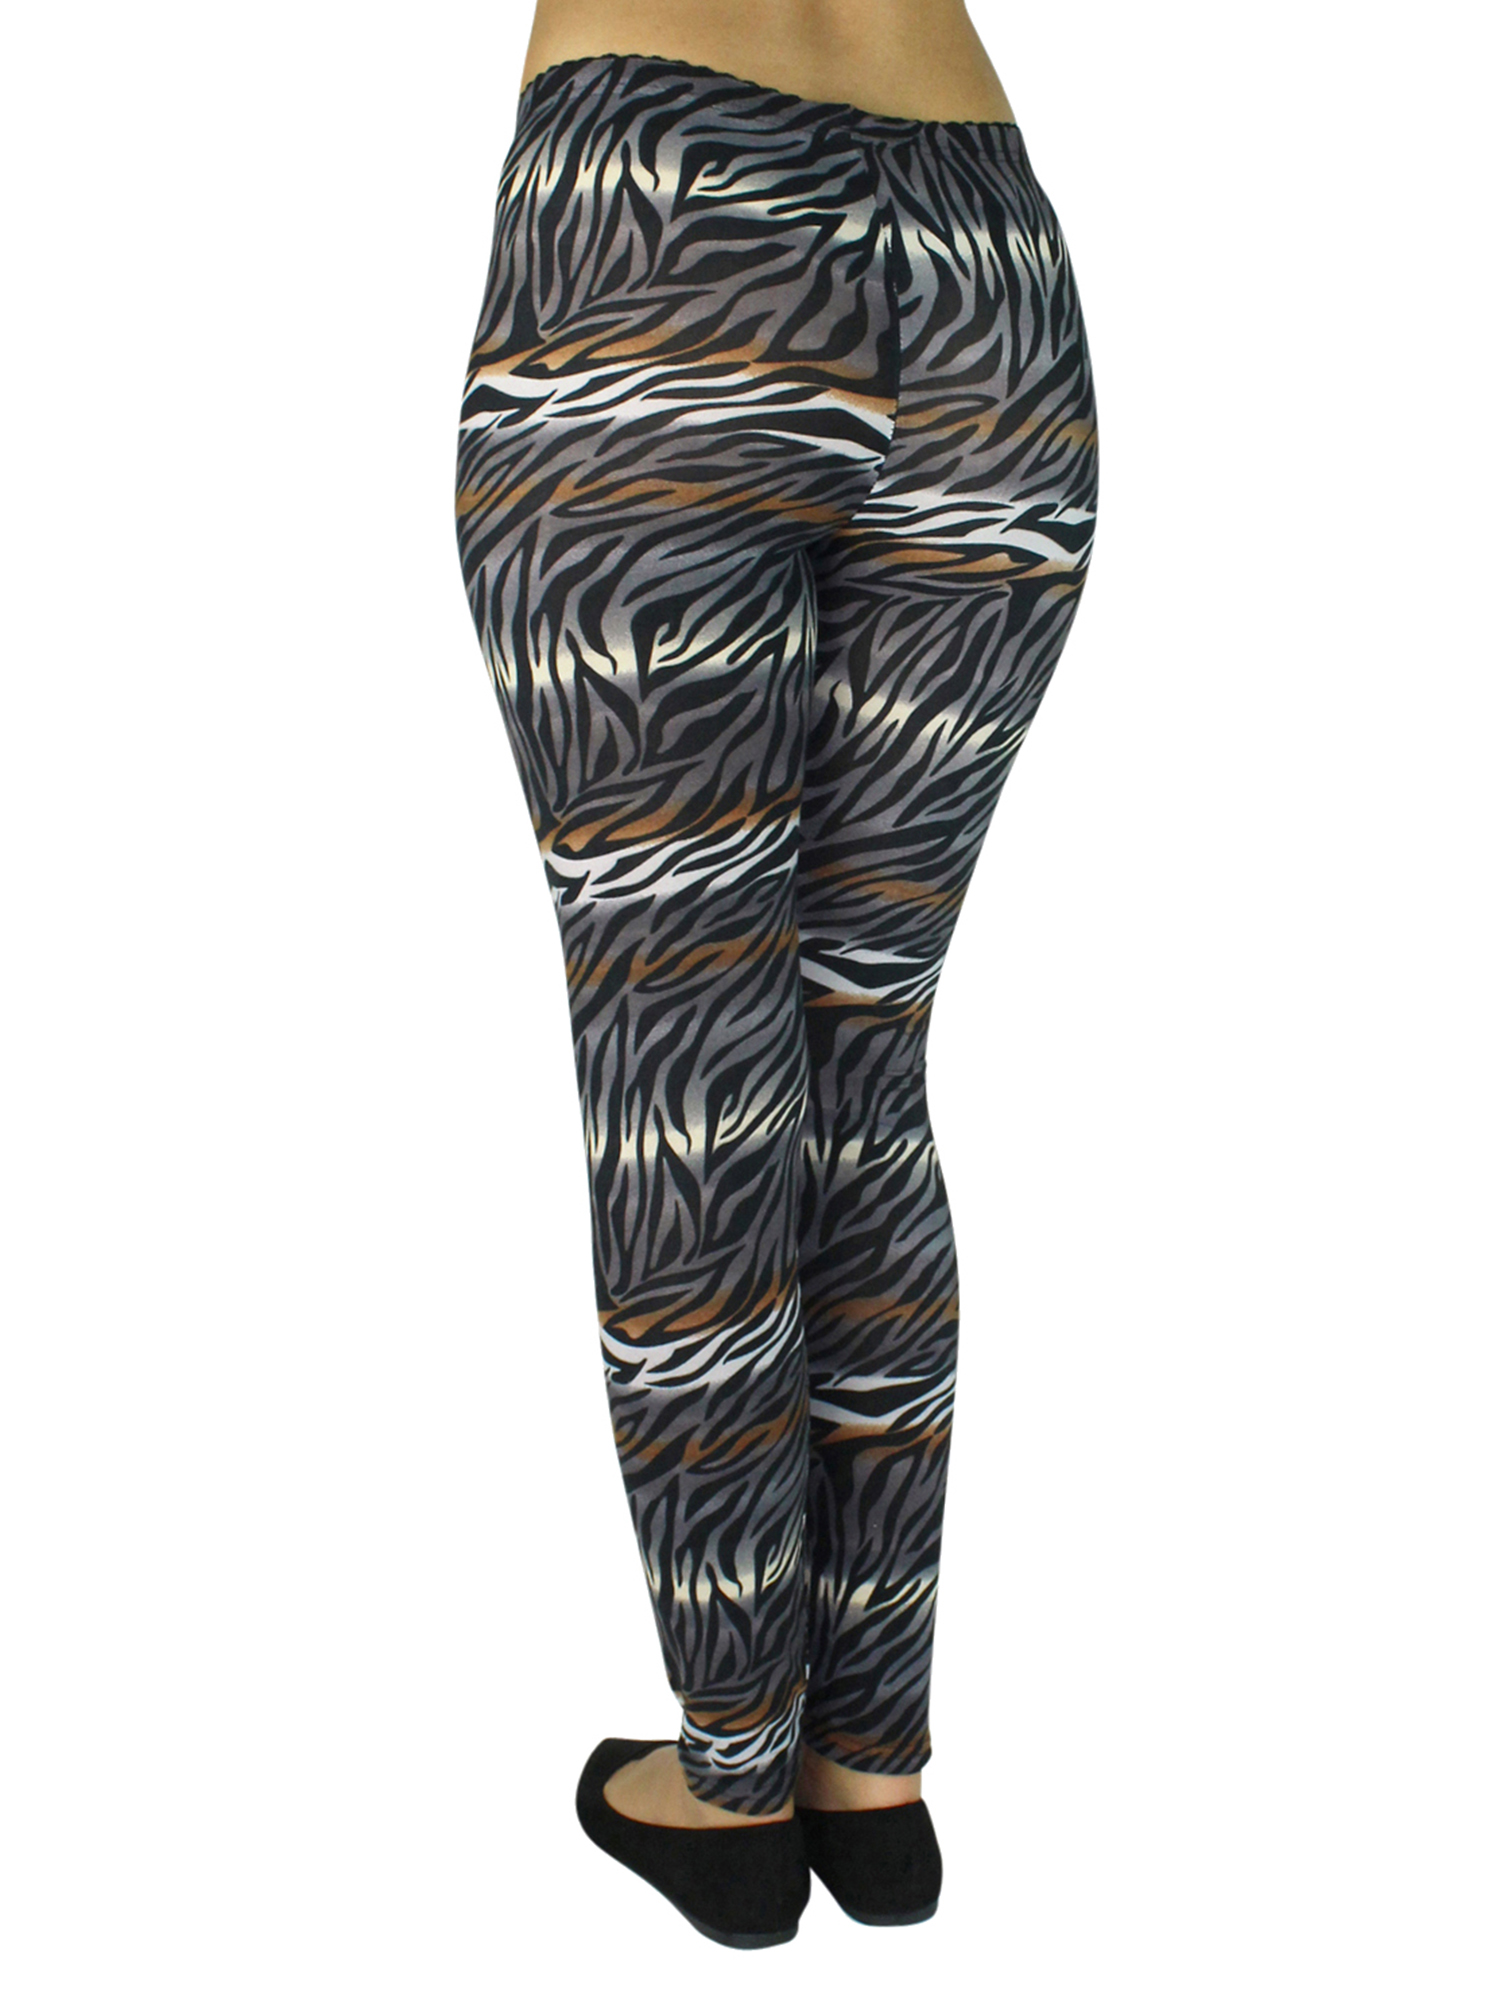 Brown & Black Tiger Animal Print Leggings Size Small/Medium - image 3 of 3